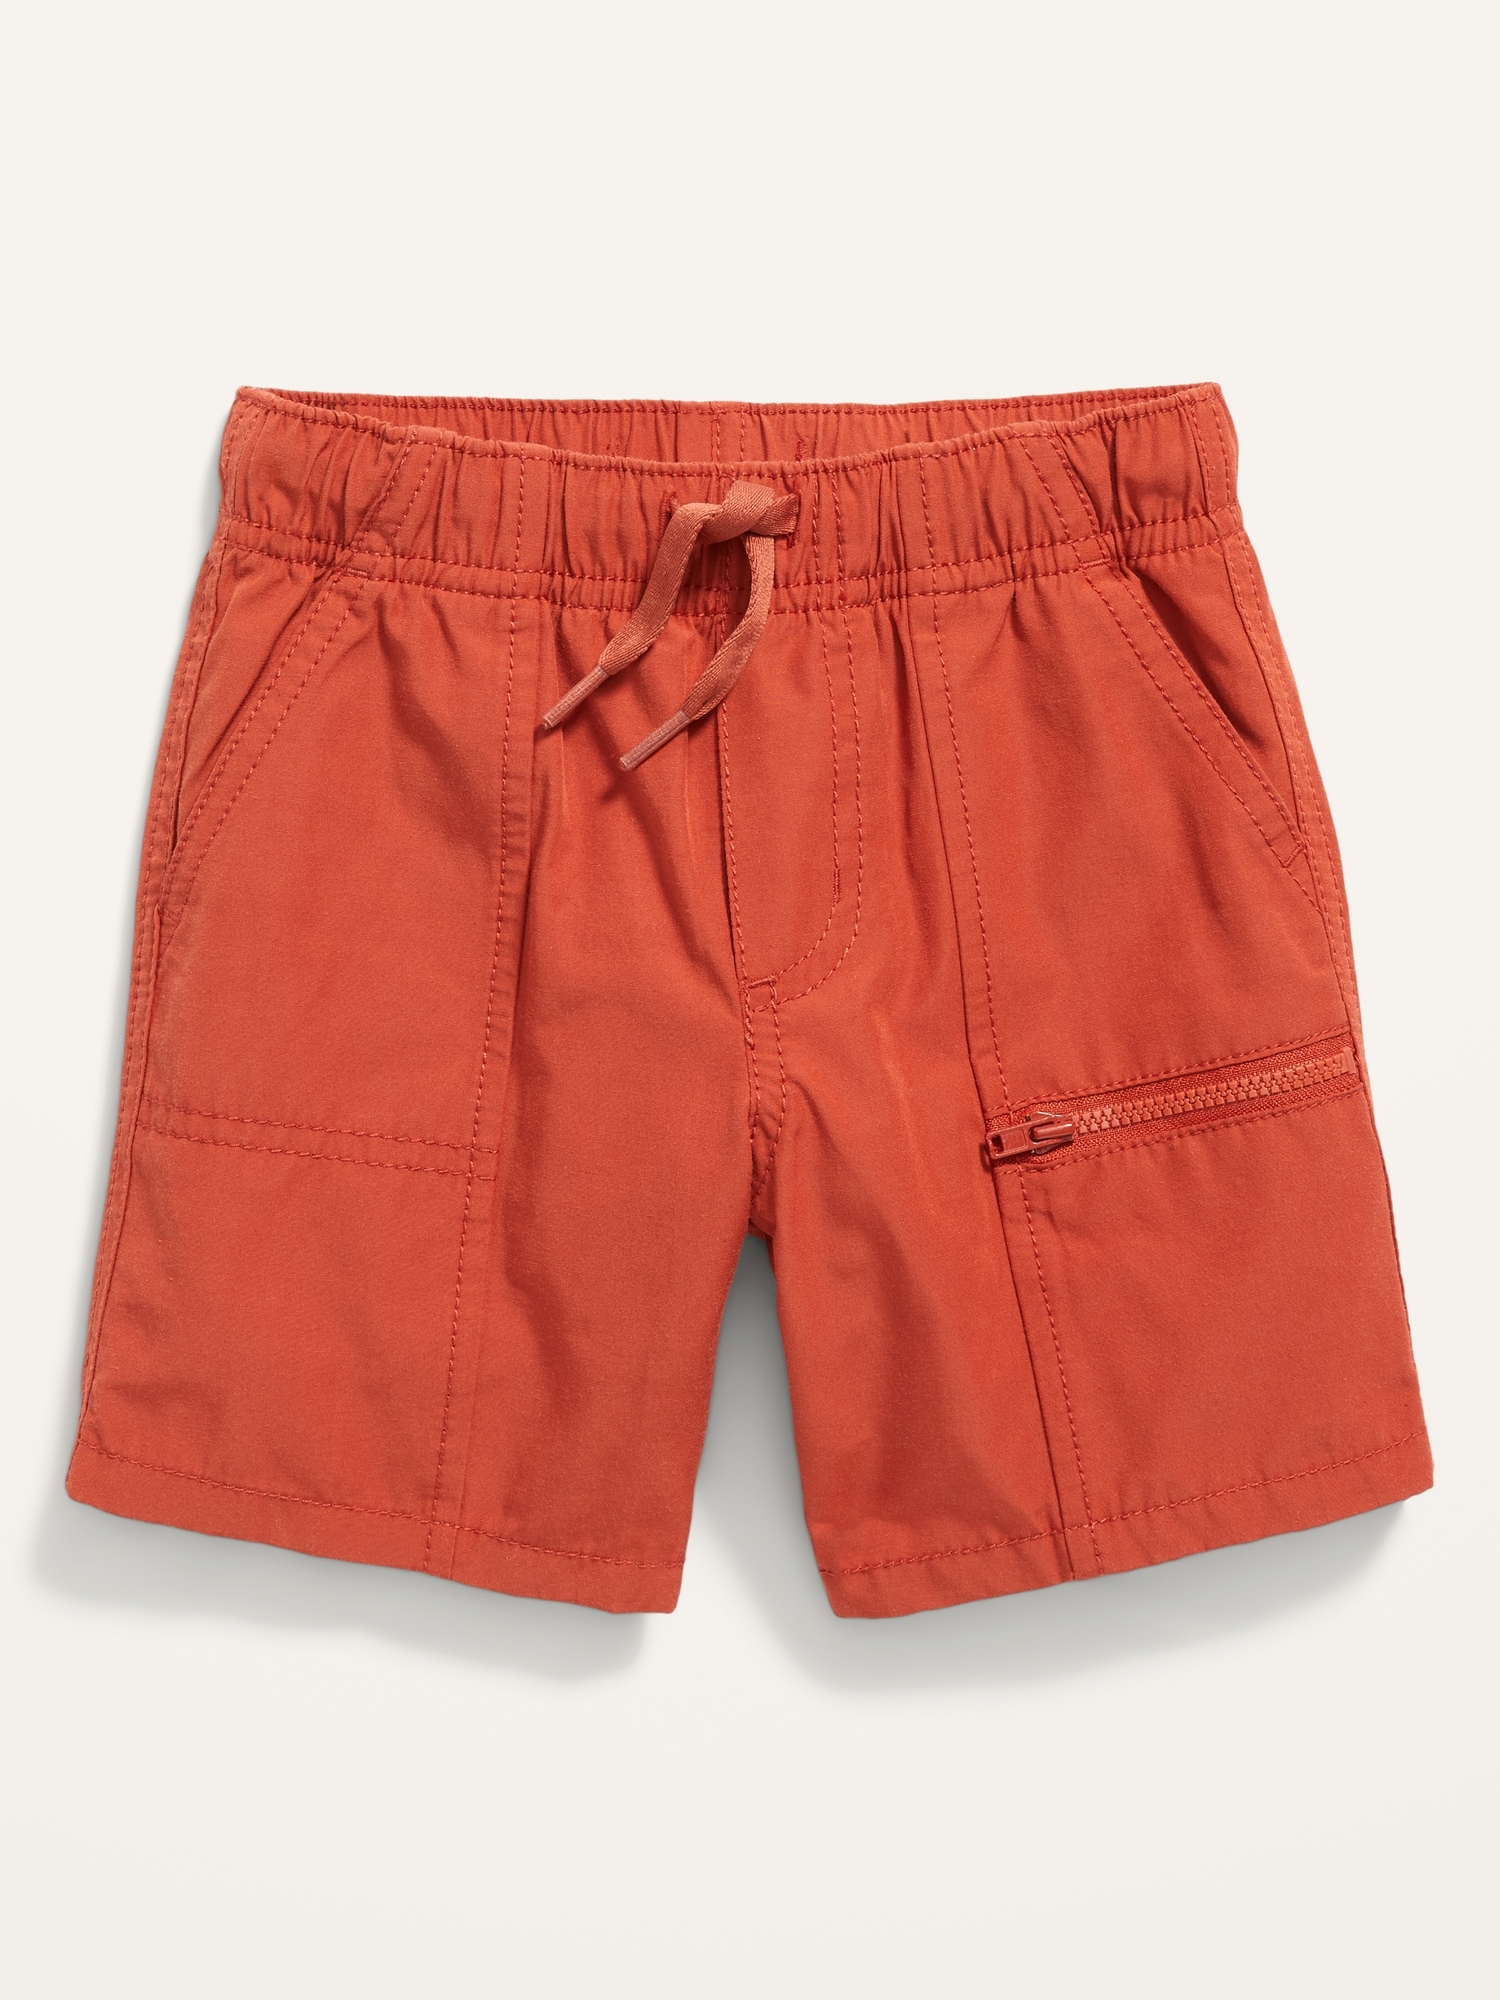 Old Navy Hybrid Zip-Pocket Hiking Shorts for Toddler Boys red. 1